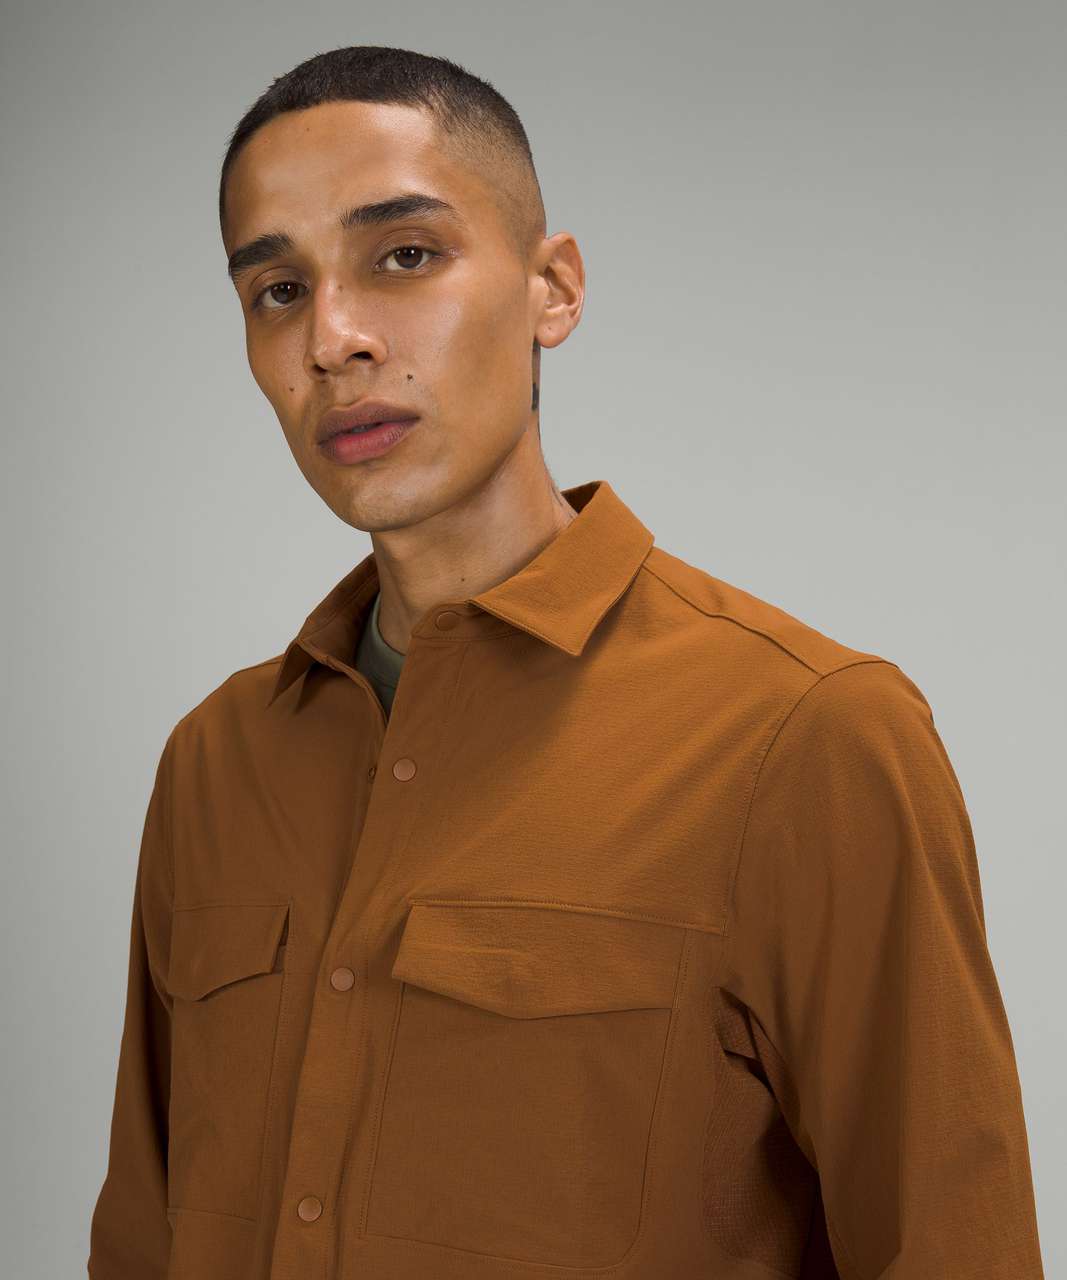 Lululemon Double Pocket Long Sleeve Overshirt - Copper Brown